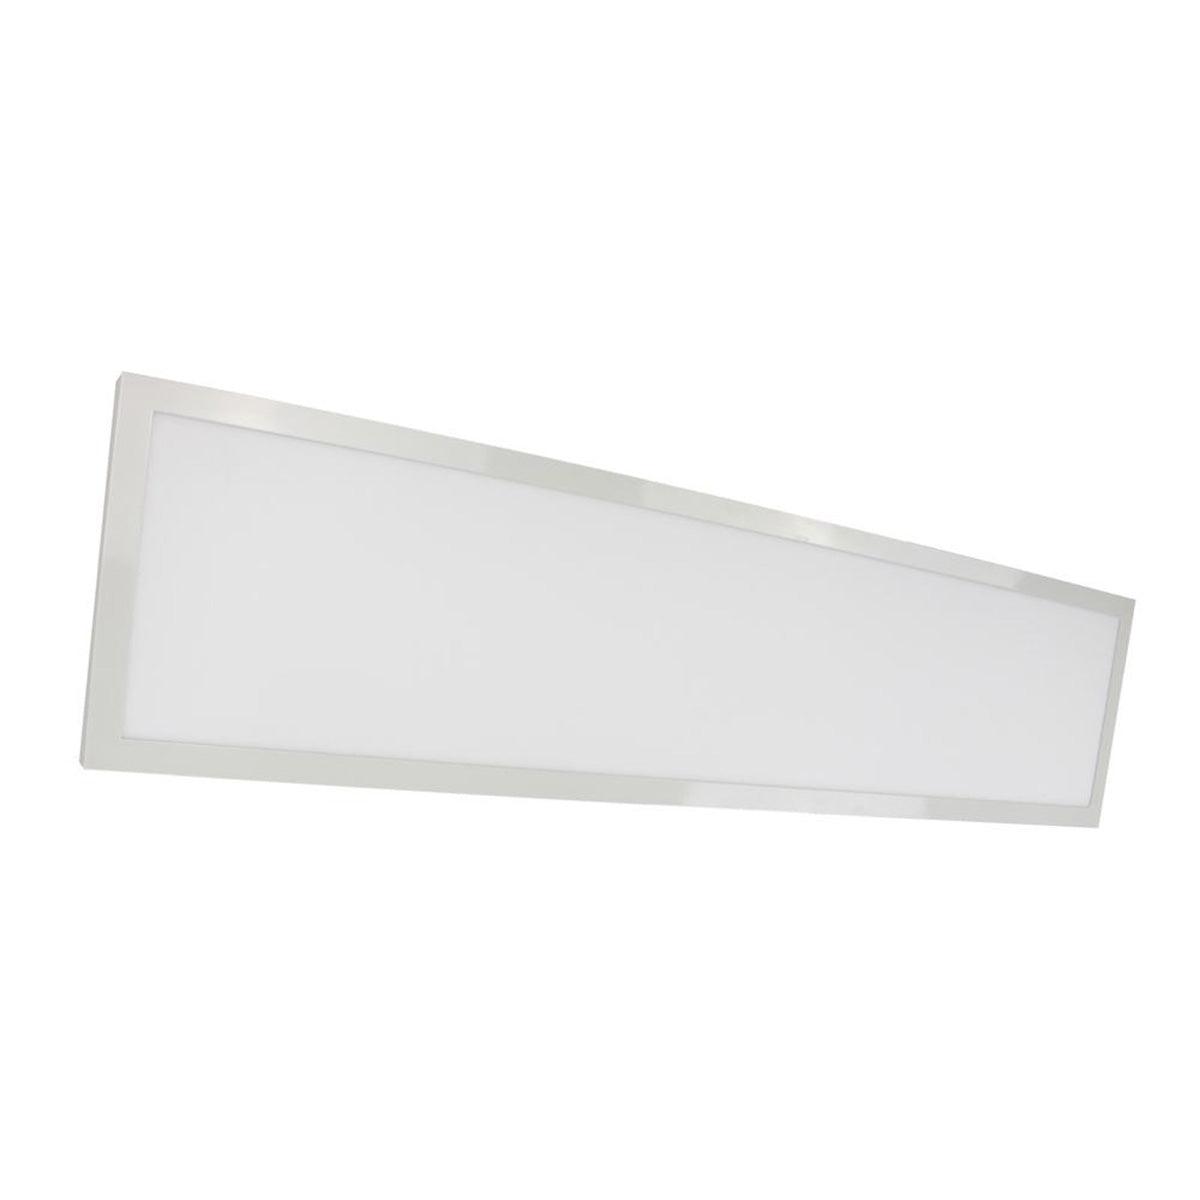 Blink Plus 1x4 LED Surface Mount Panel 3600 Lumens 3000K White